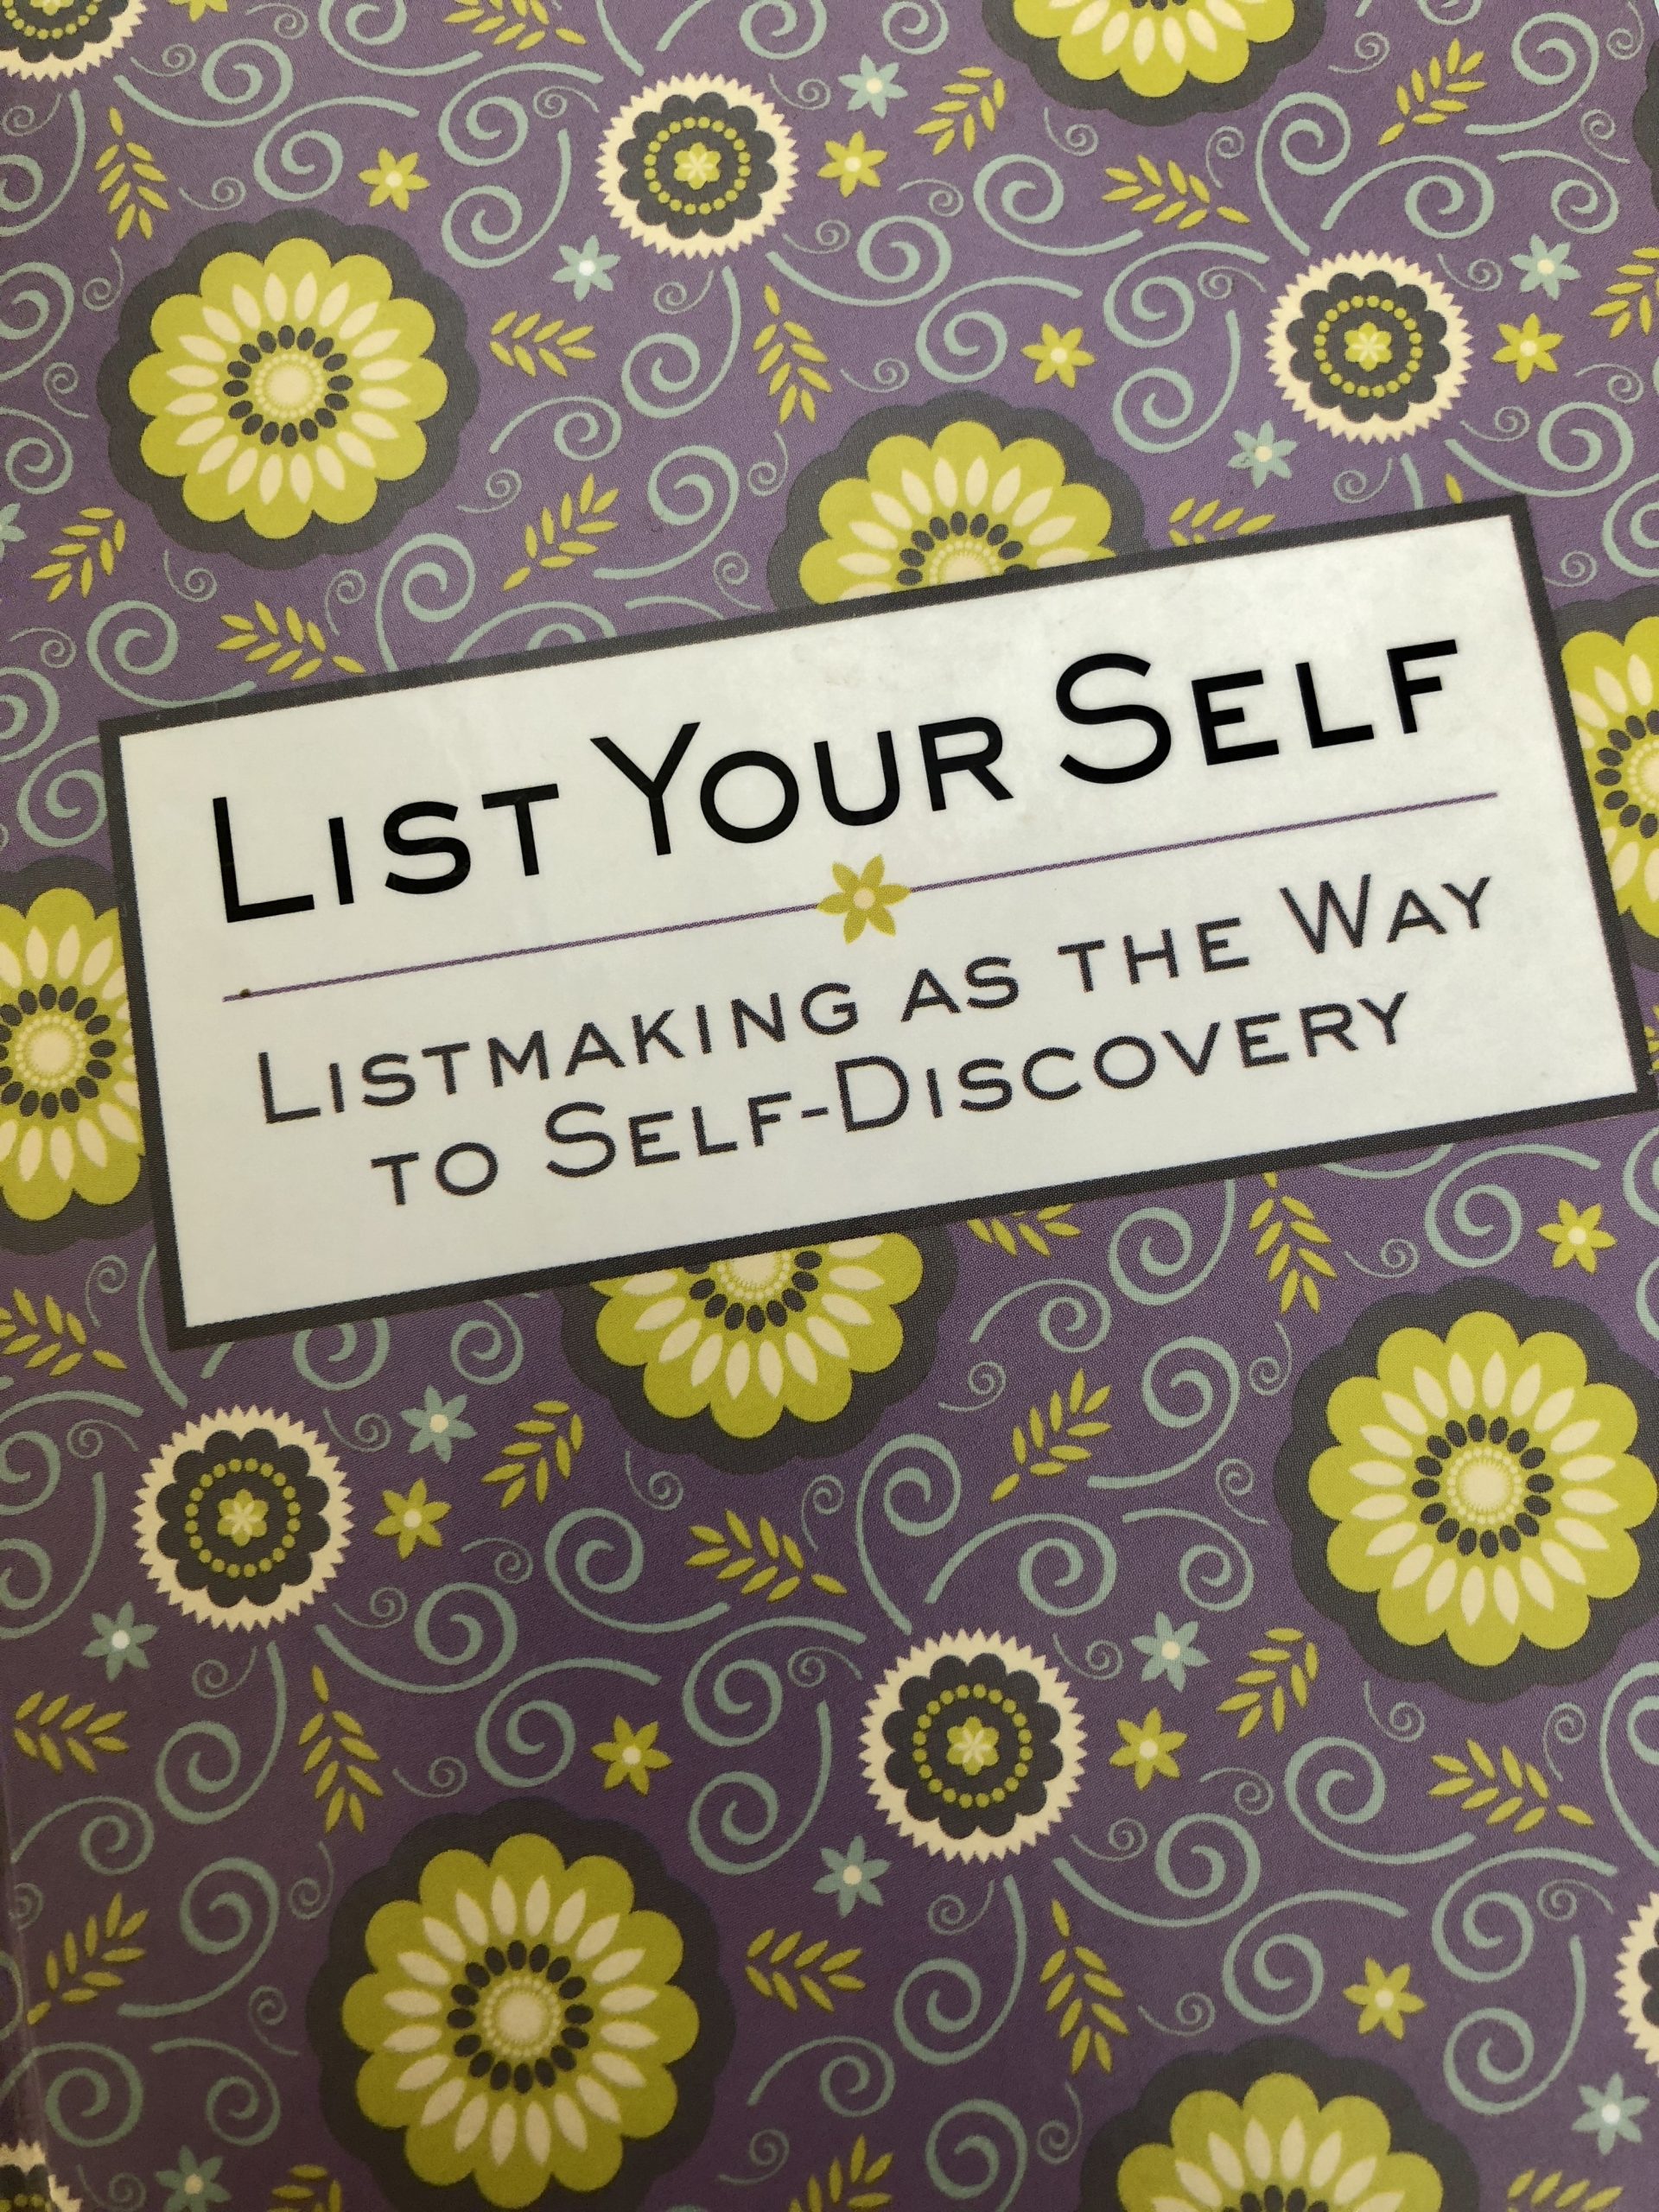 I Love Lists - List Your Self